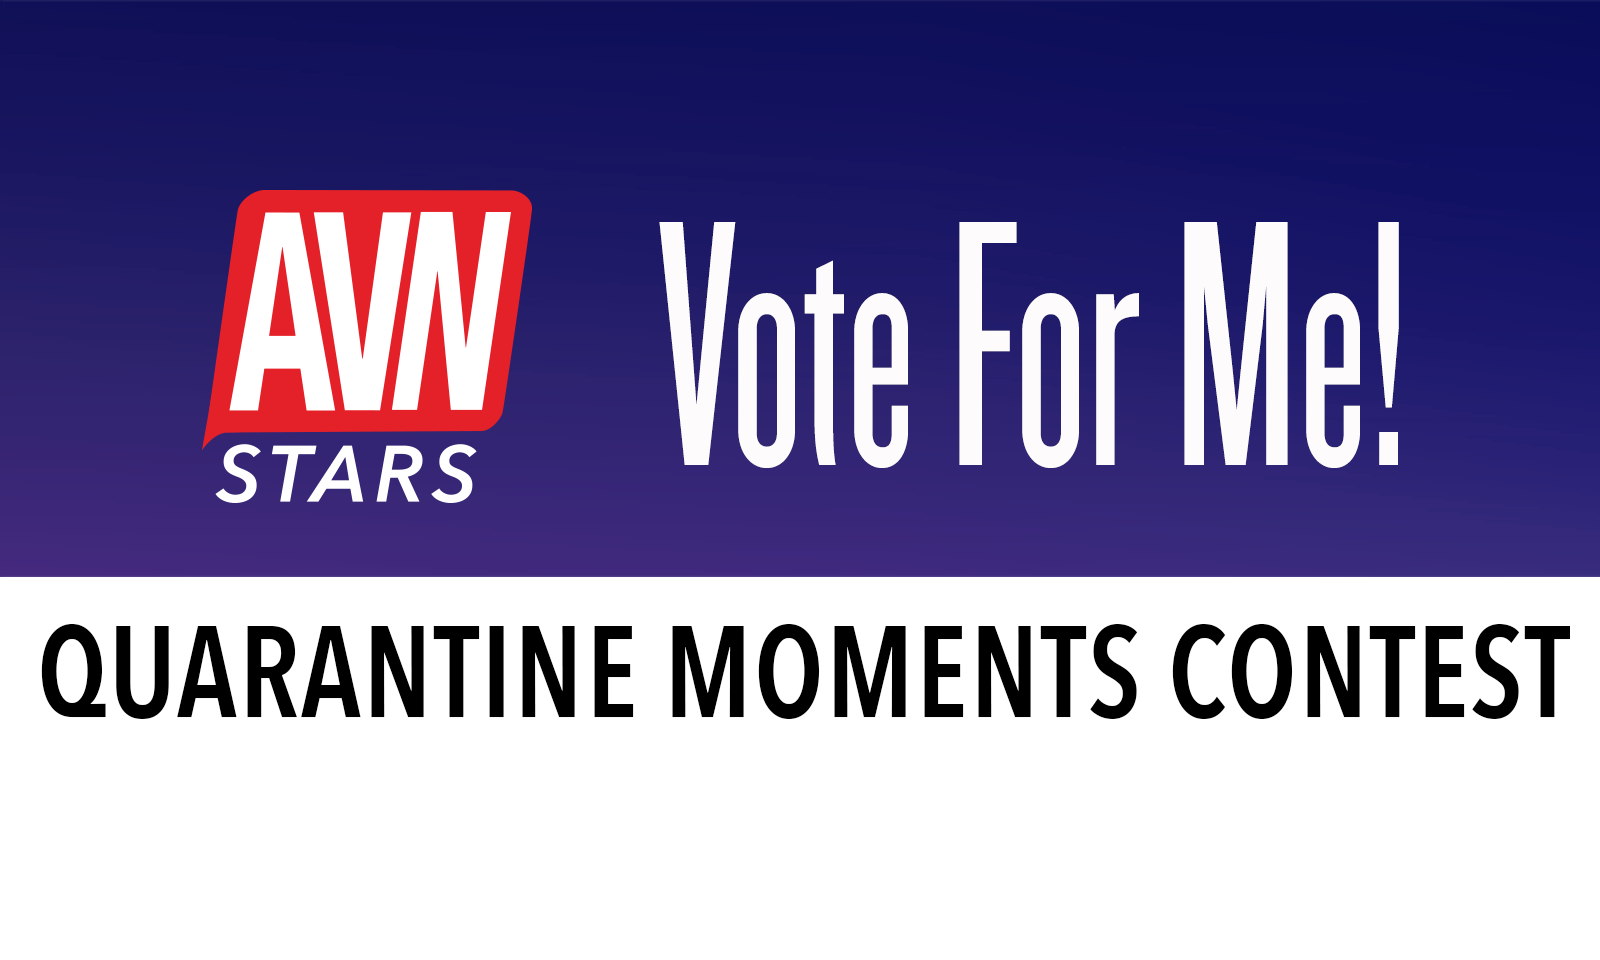 AVN Stars Announces ‘Quarantine Moments Contest'